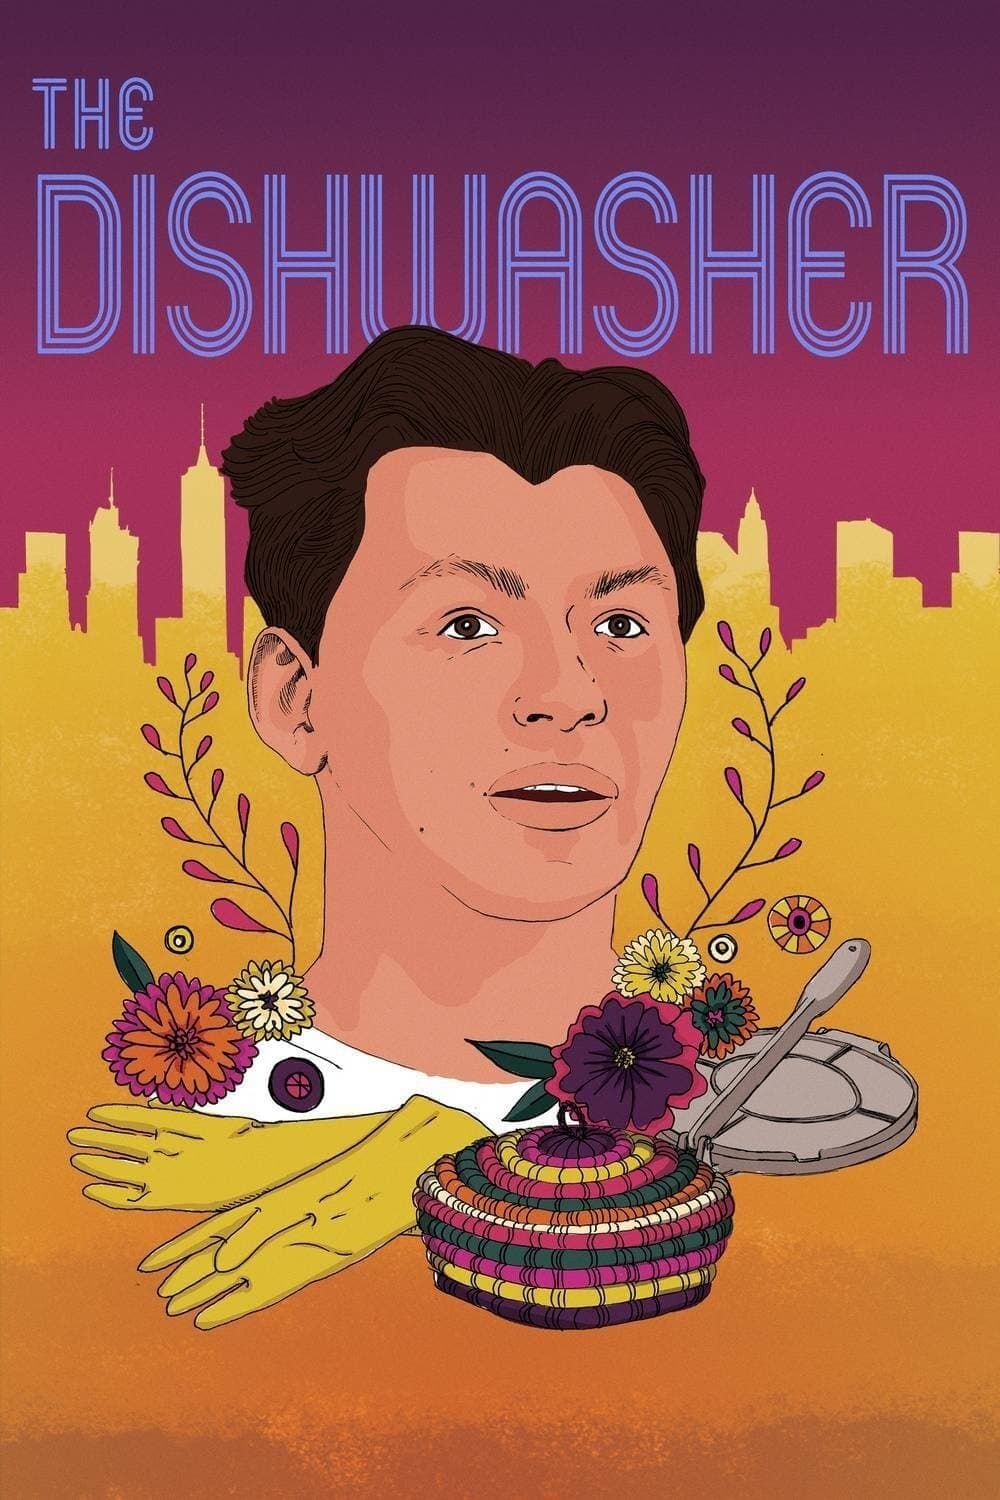 The Dishwasher film